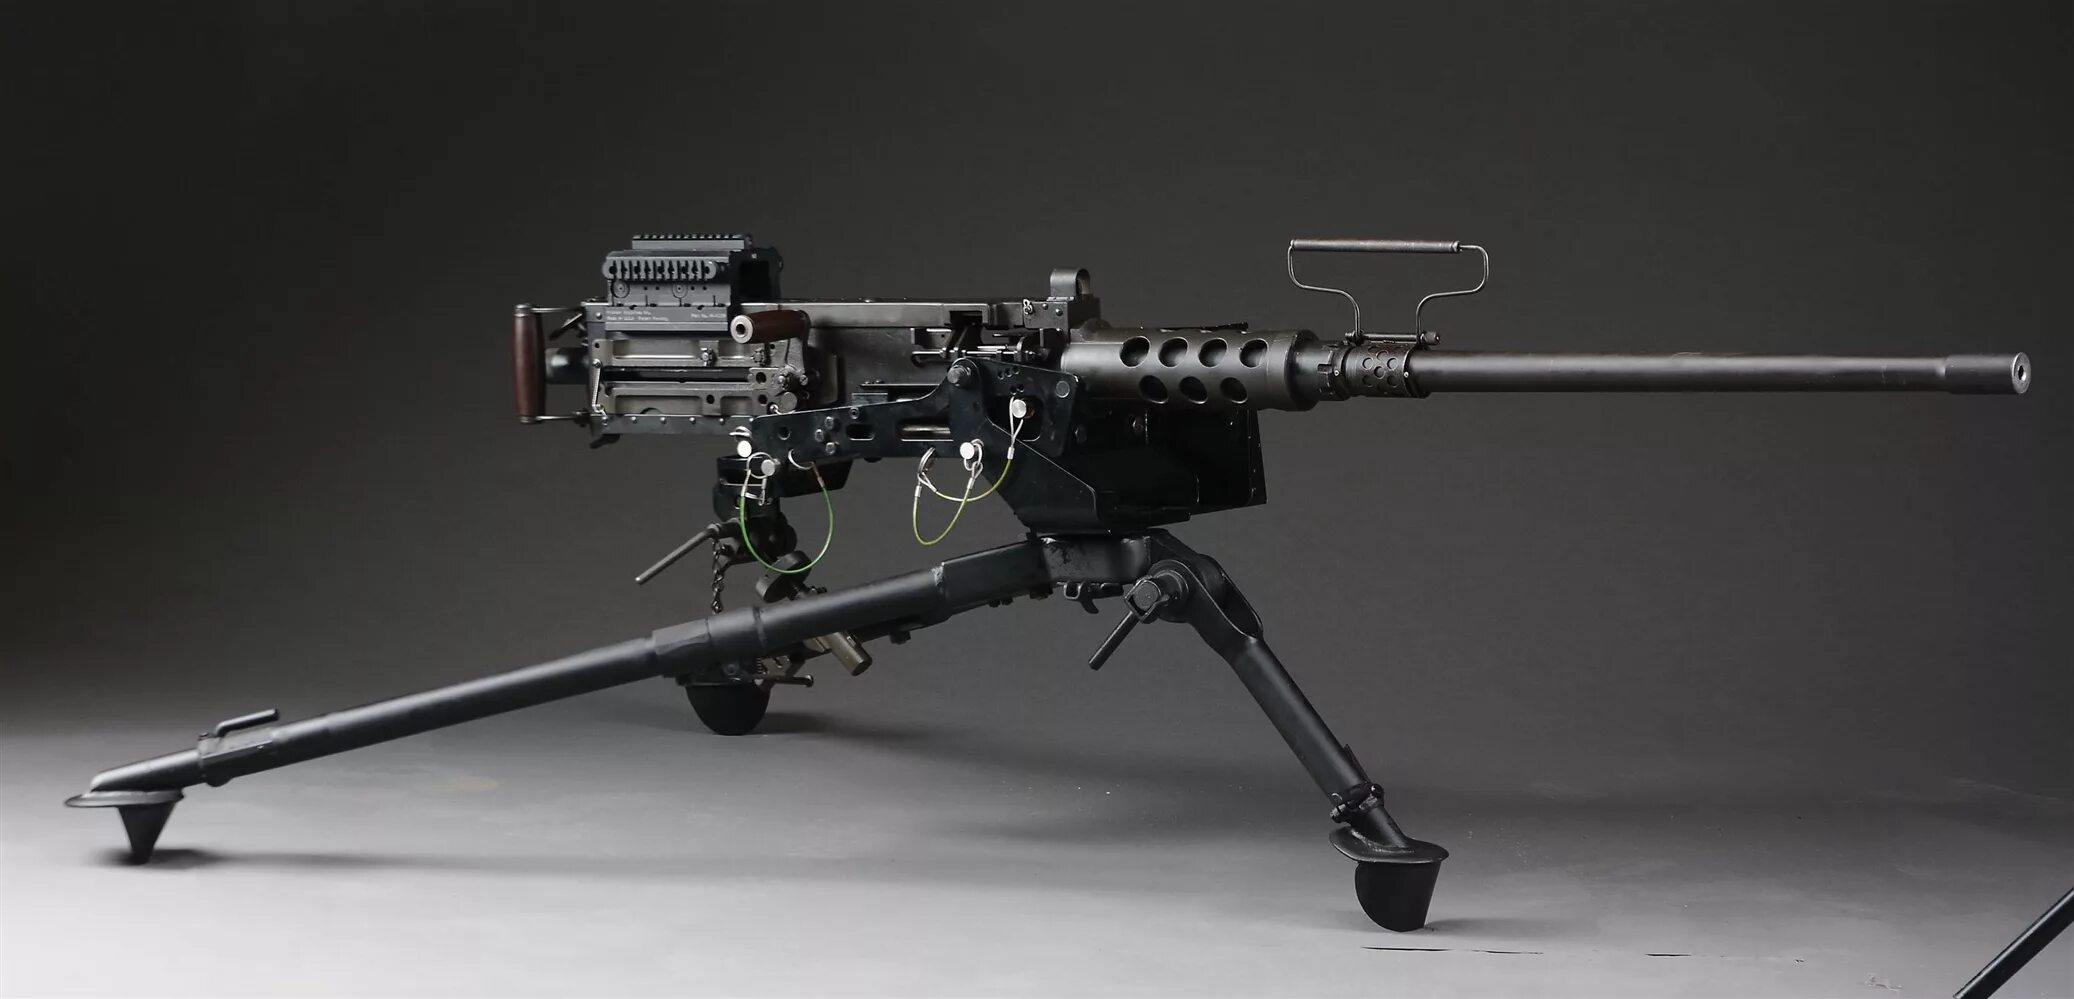 M2 Browning калибра 50. Browning m2 50 BMG. Пулемёт калибра 50 BMG. Крупнокалиберный пулемет Браунинг м2. Бусти крупнокалиберный